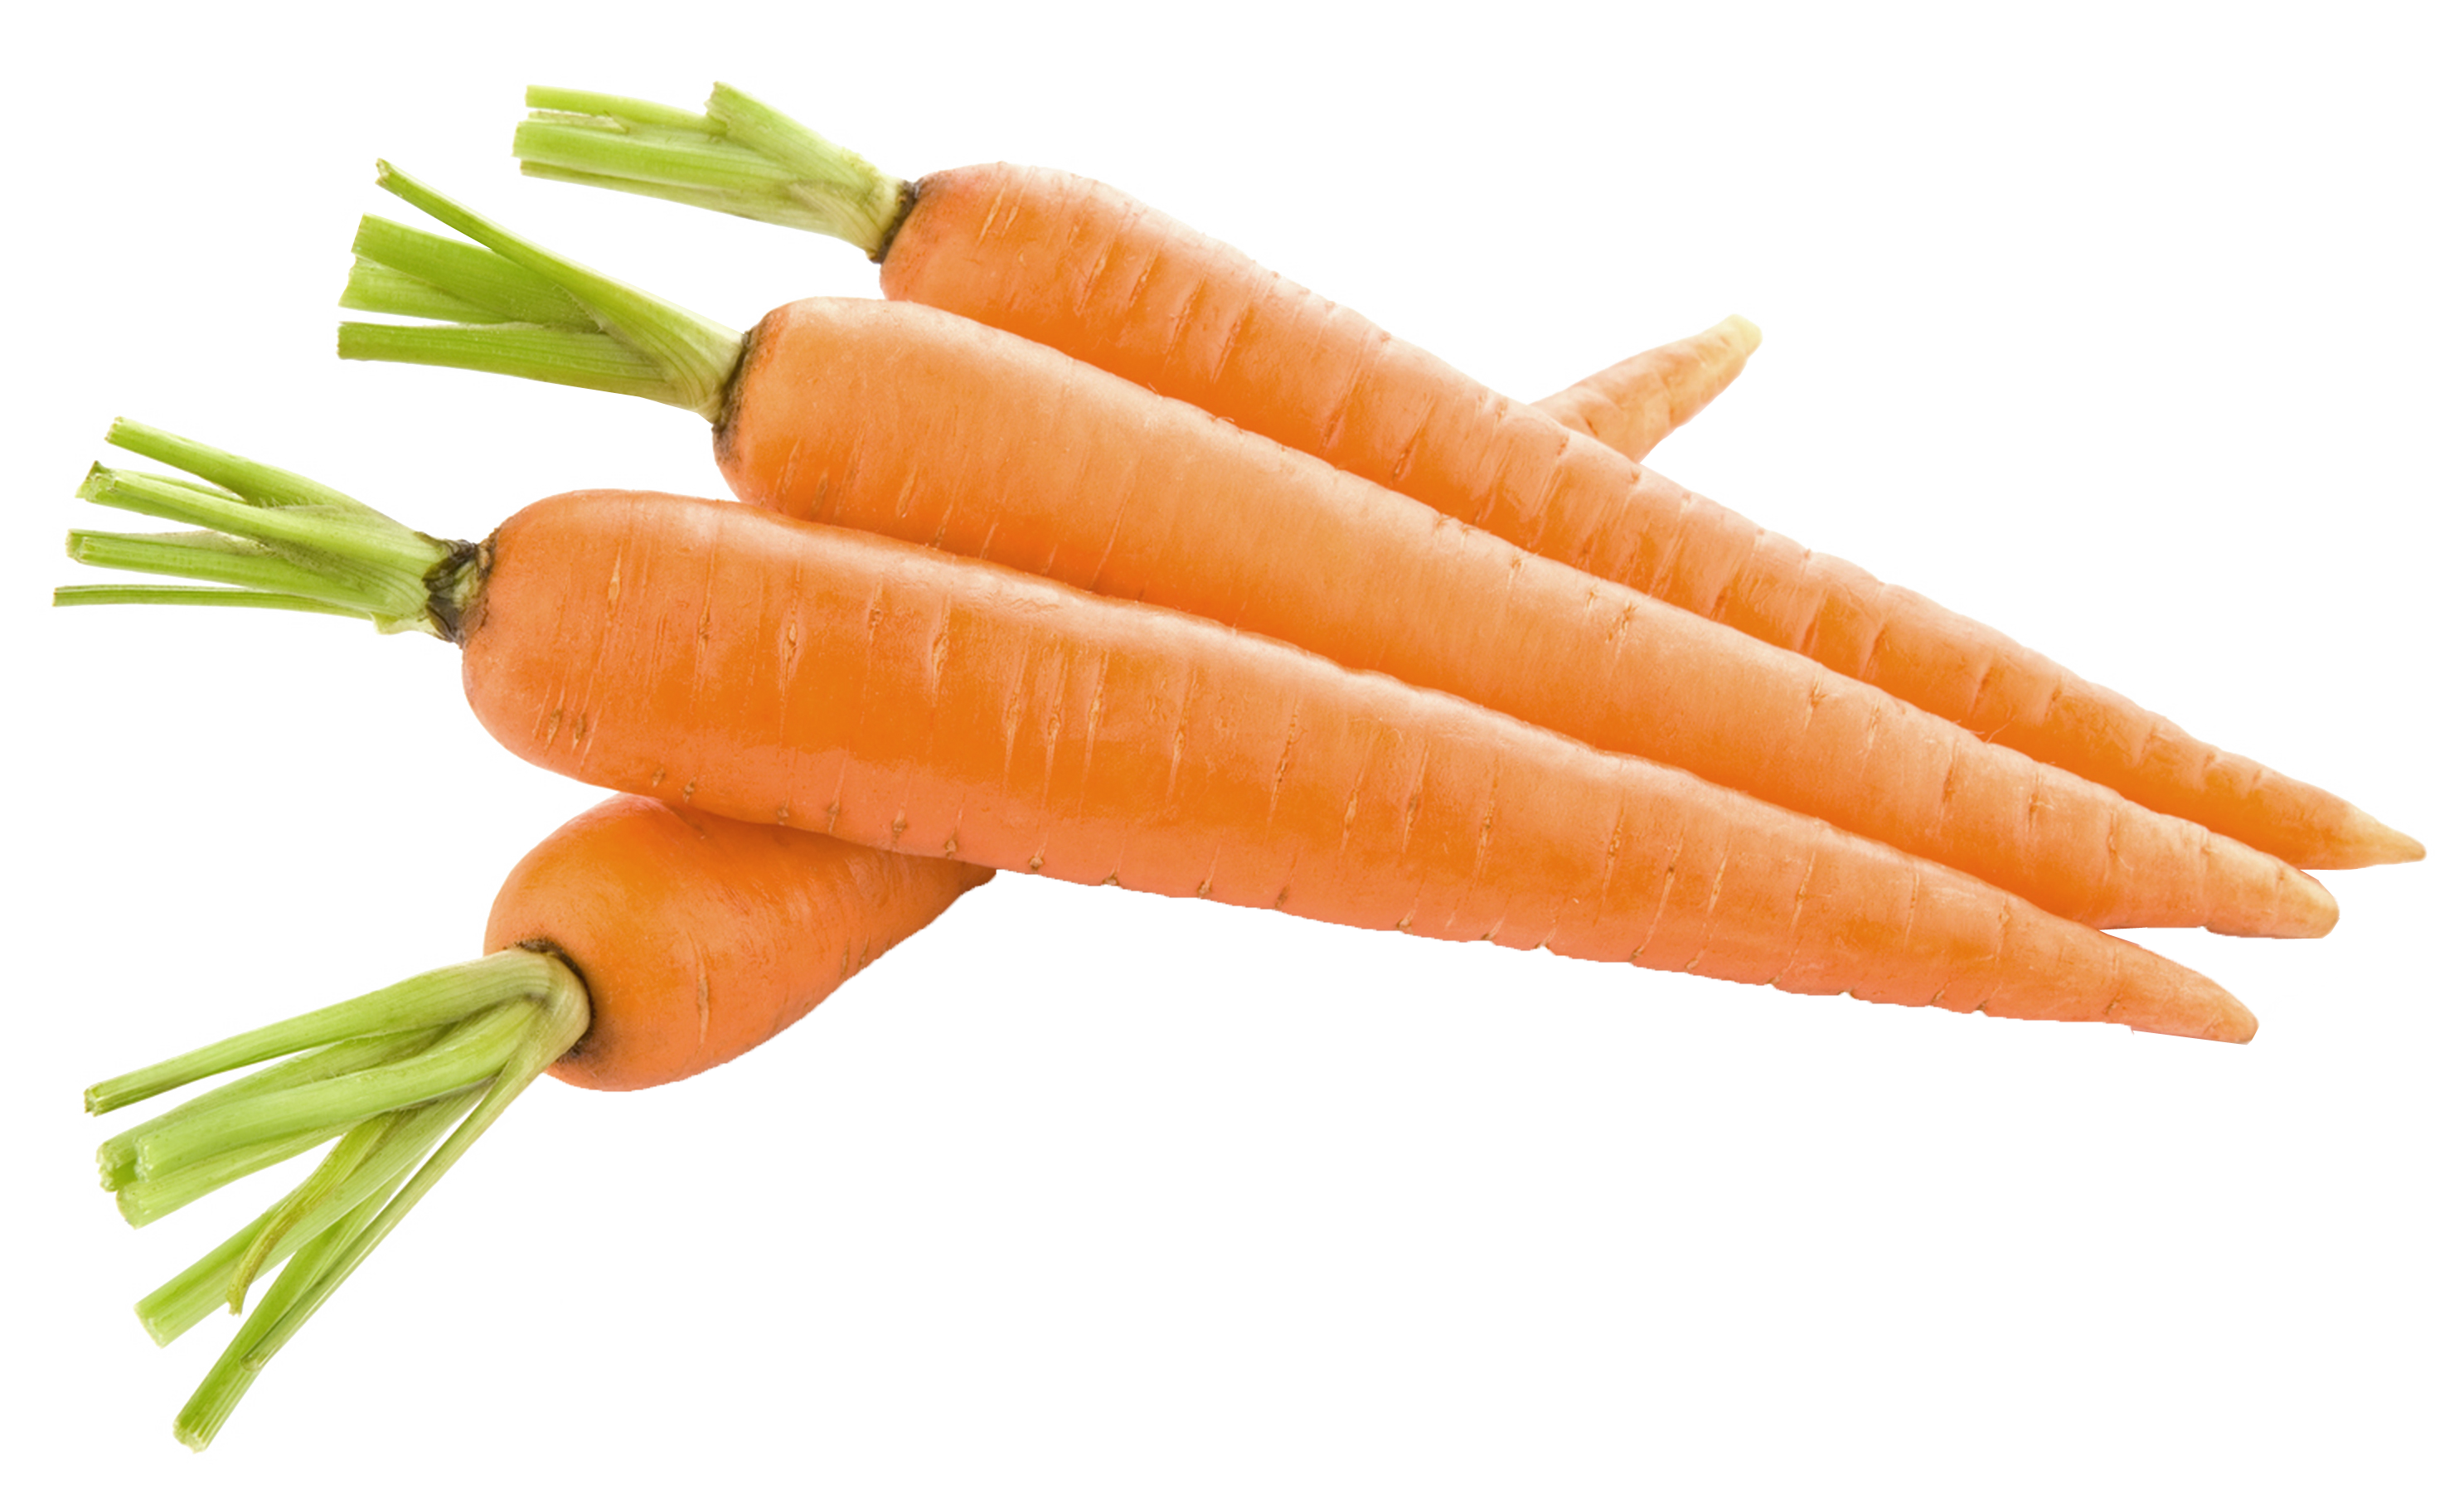 Download Big Carrot PNG Image